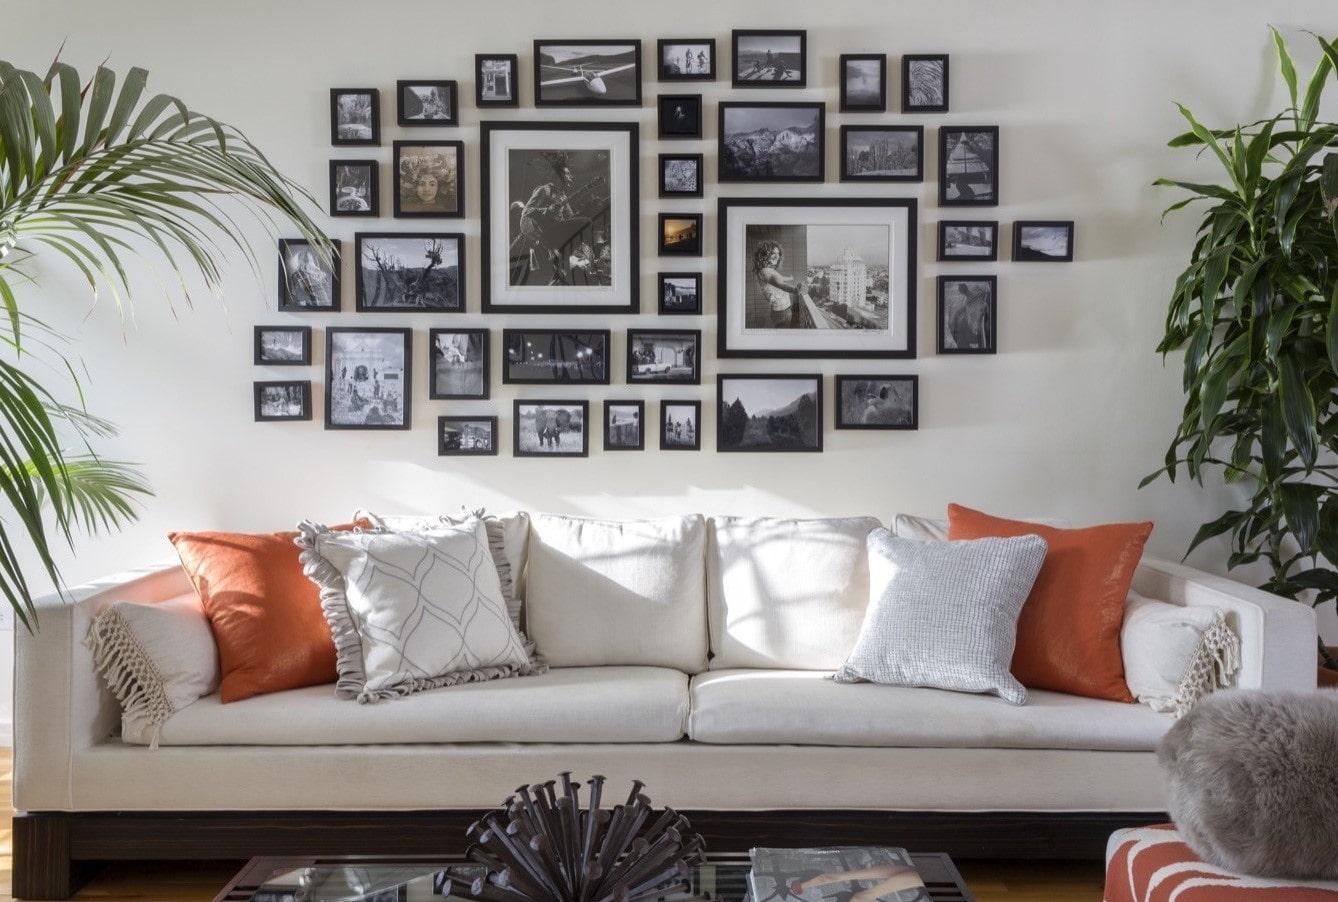 Фото на стенах: как и где разместить на стенах в квартире или доме